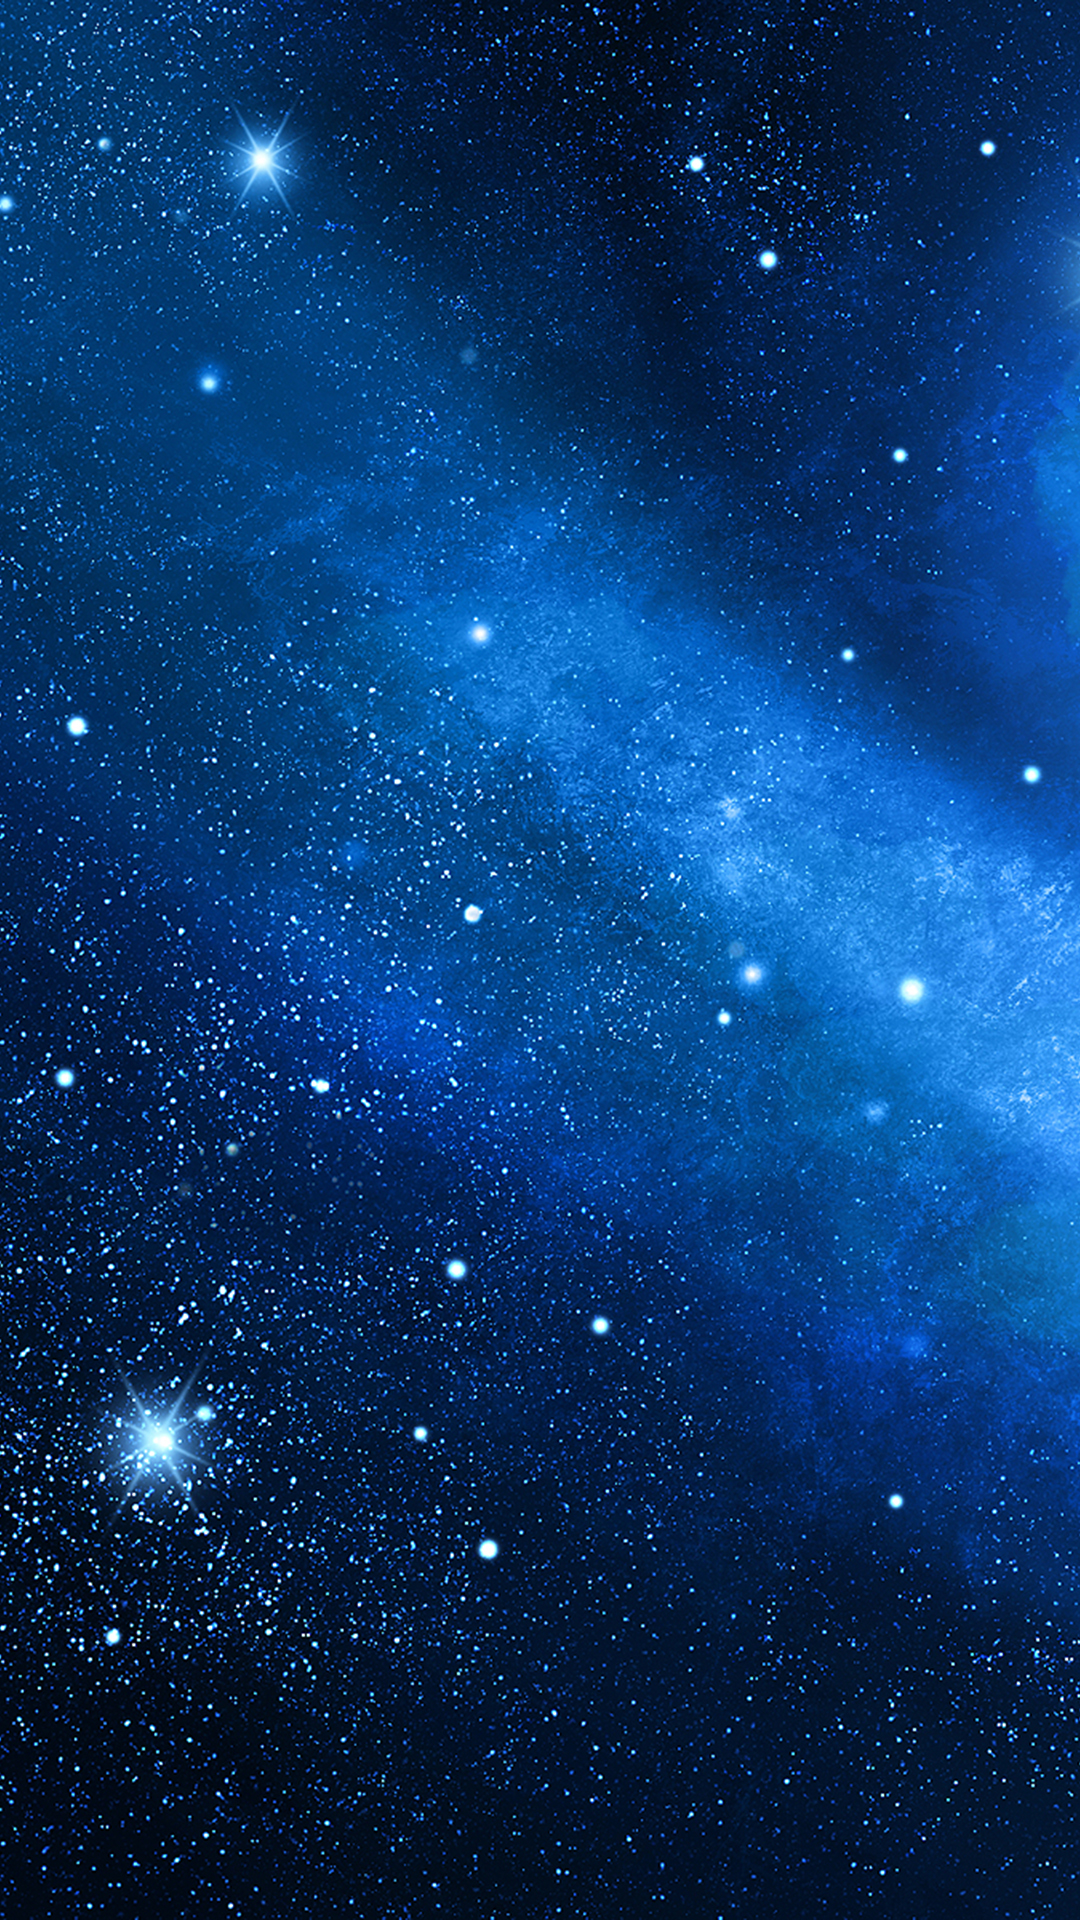 2,000+ Stunning Galaxy Wallpapers [HD] - Pixabay